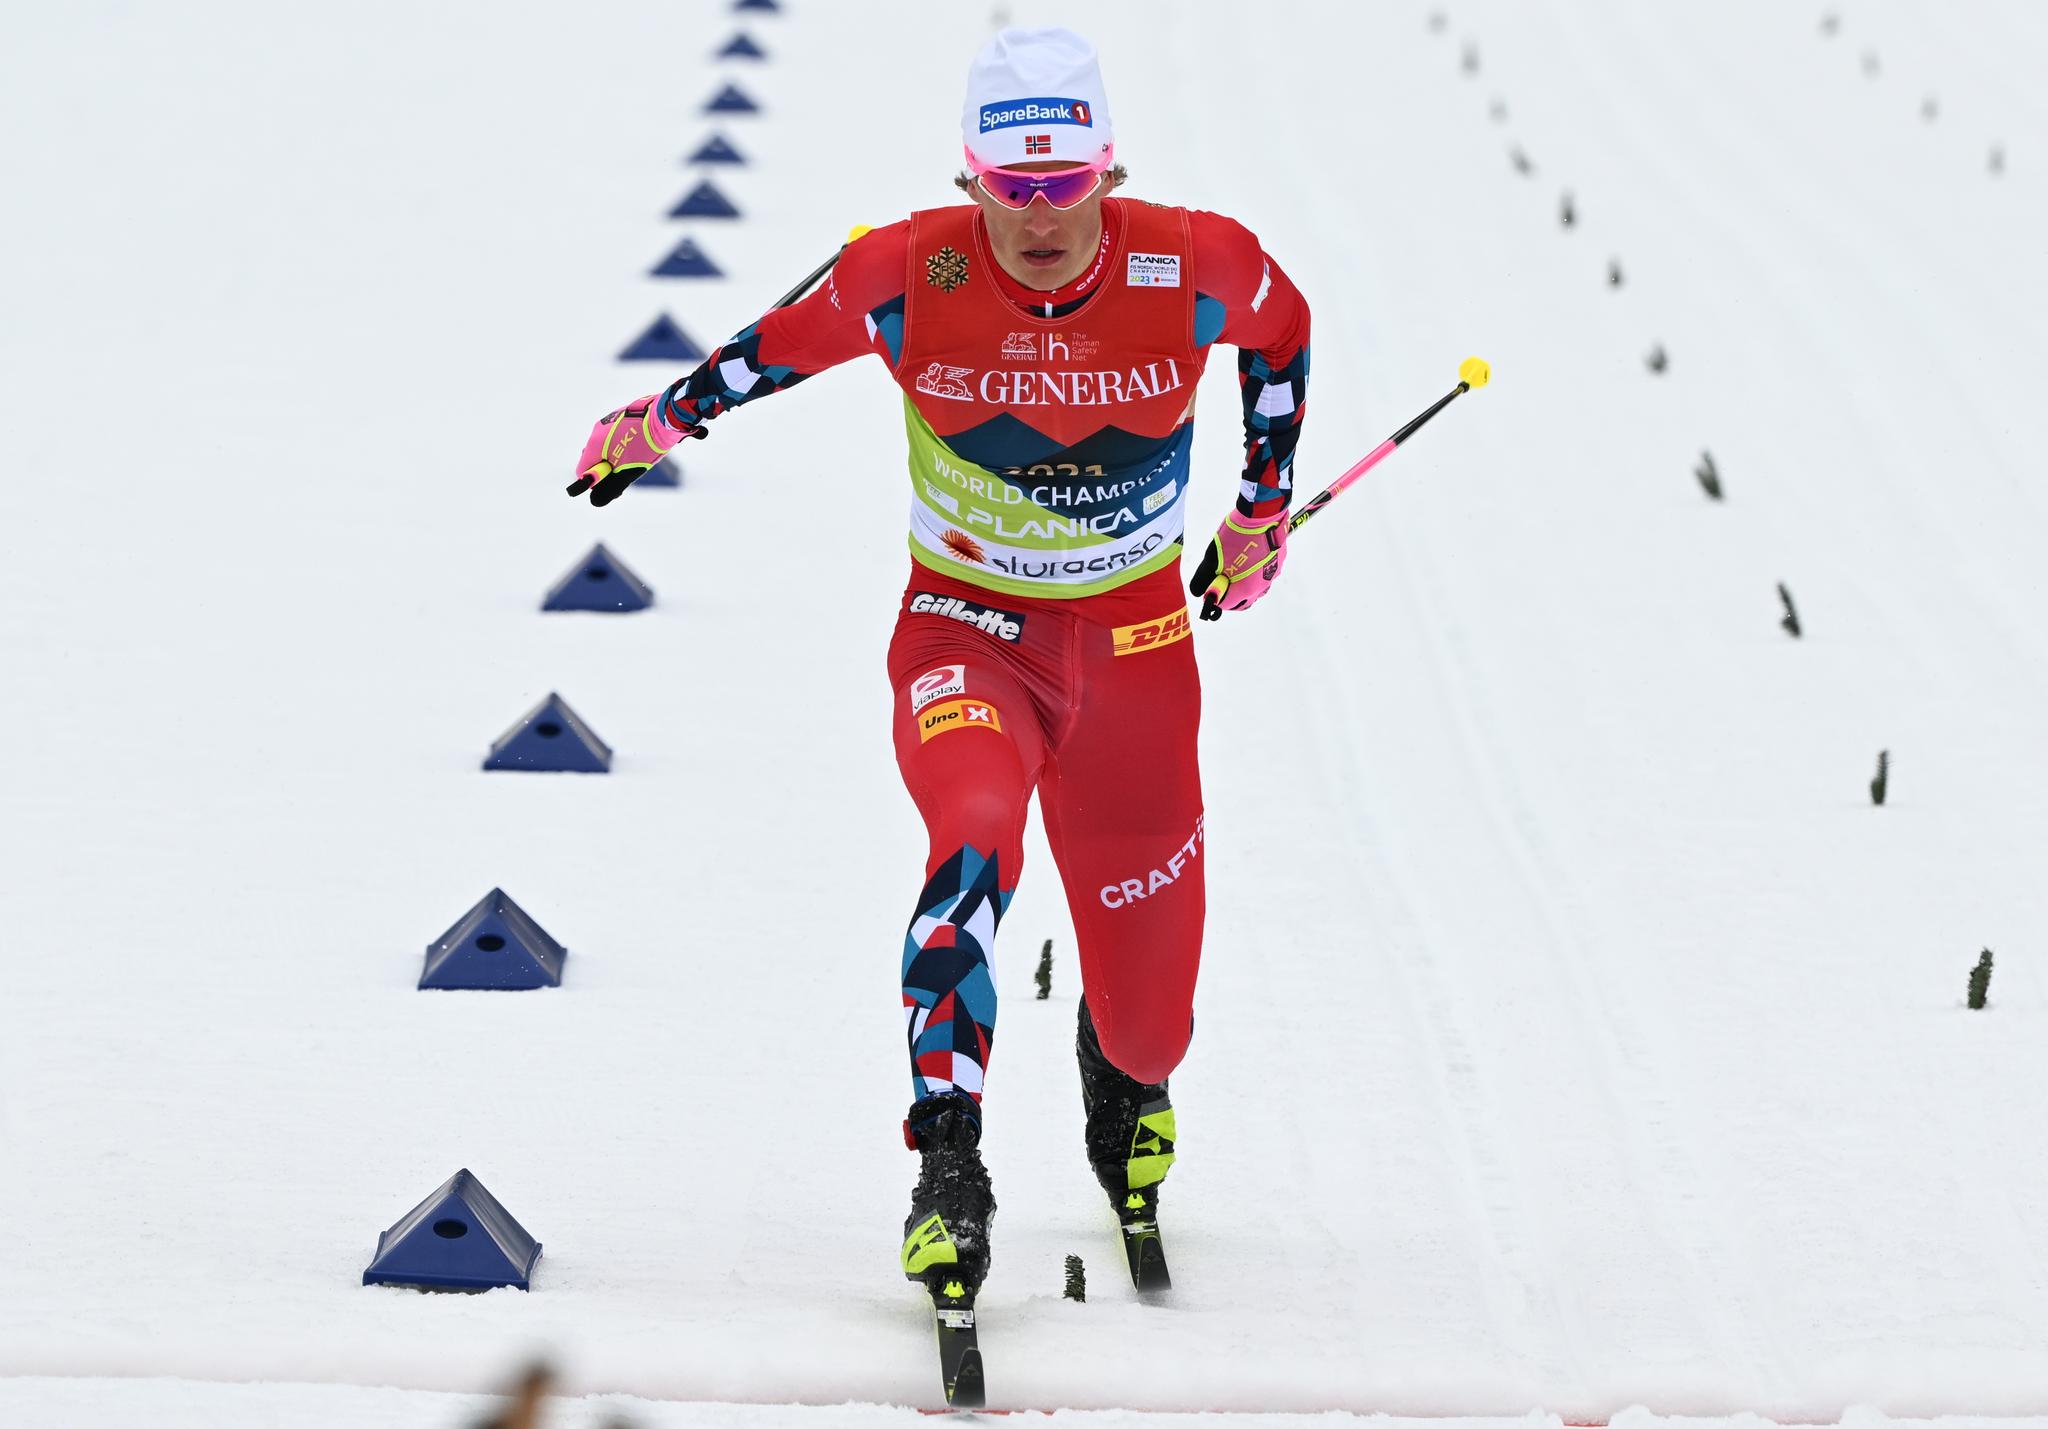 VM-FORM: Johannes Høsflot Klæbo var god i sprintprologen.